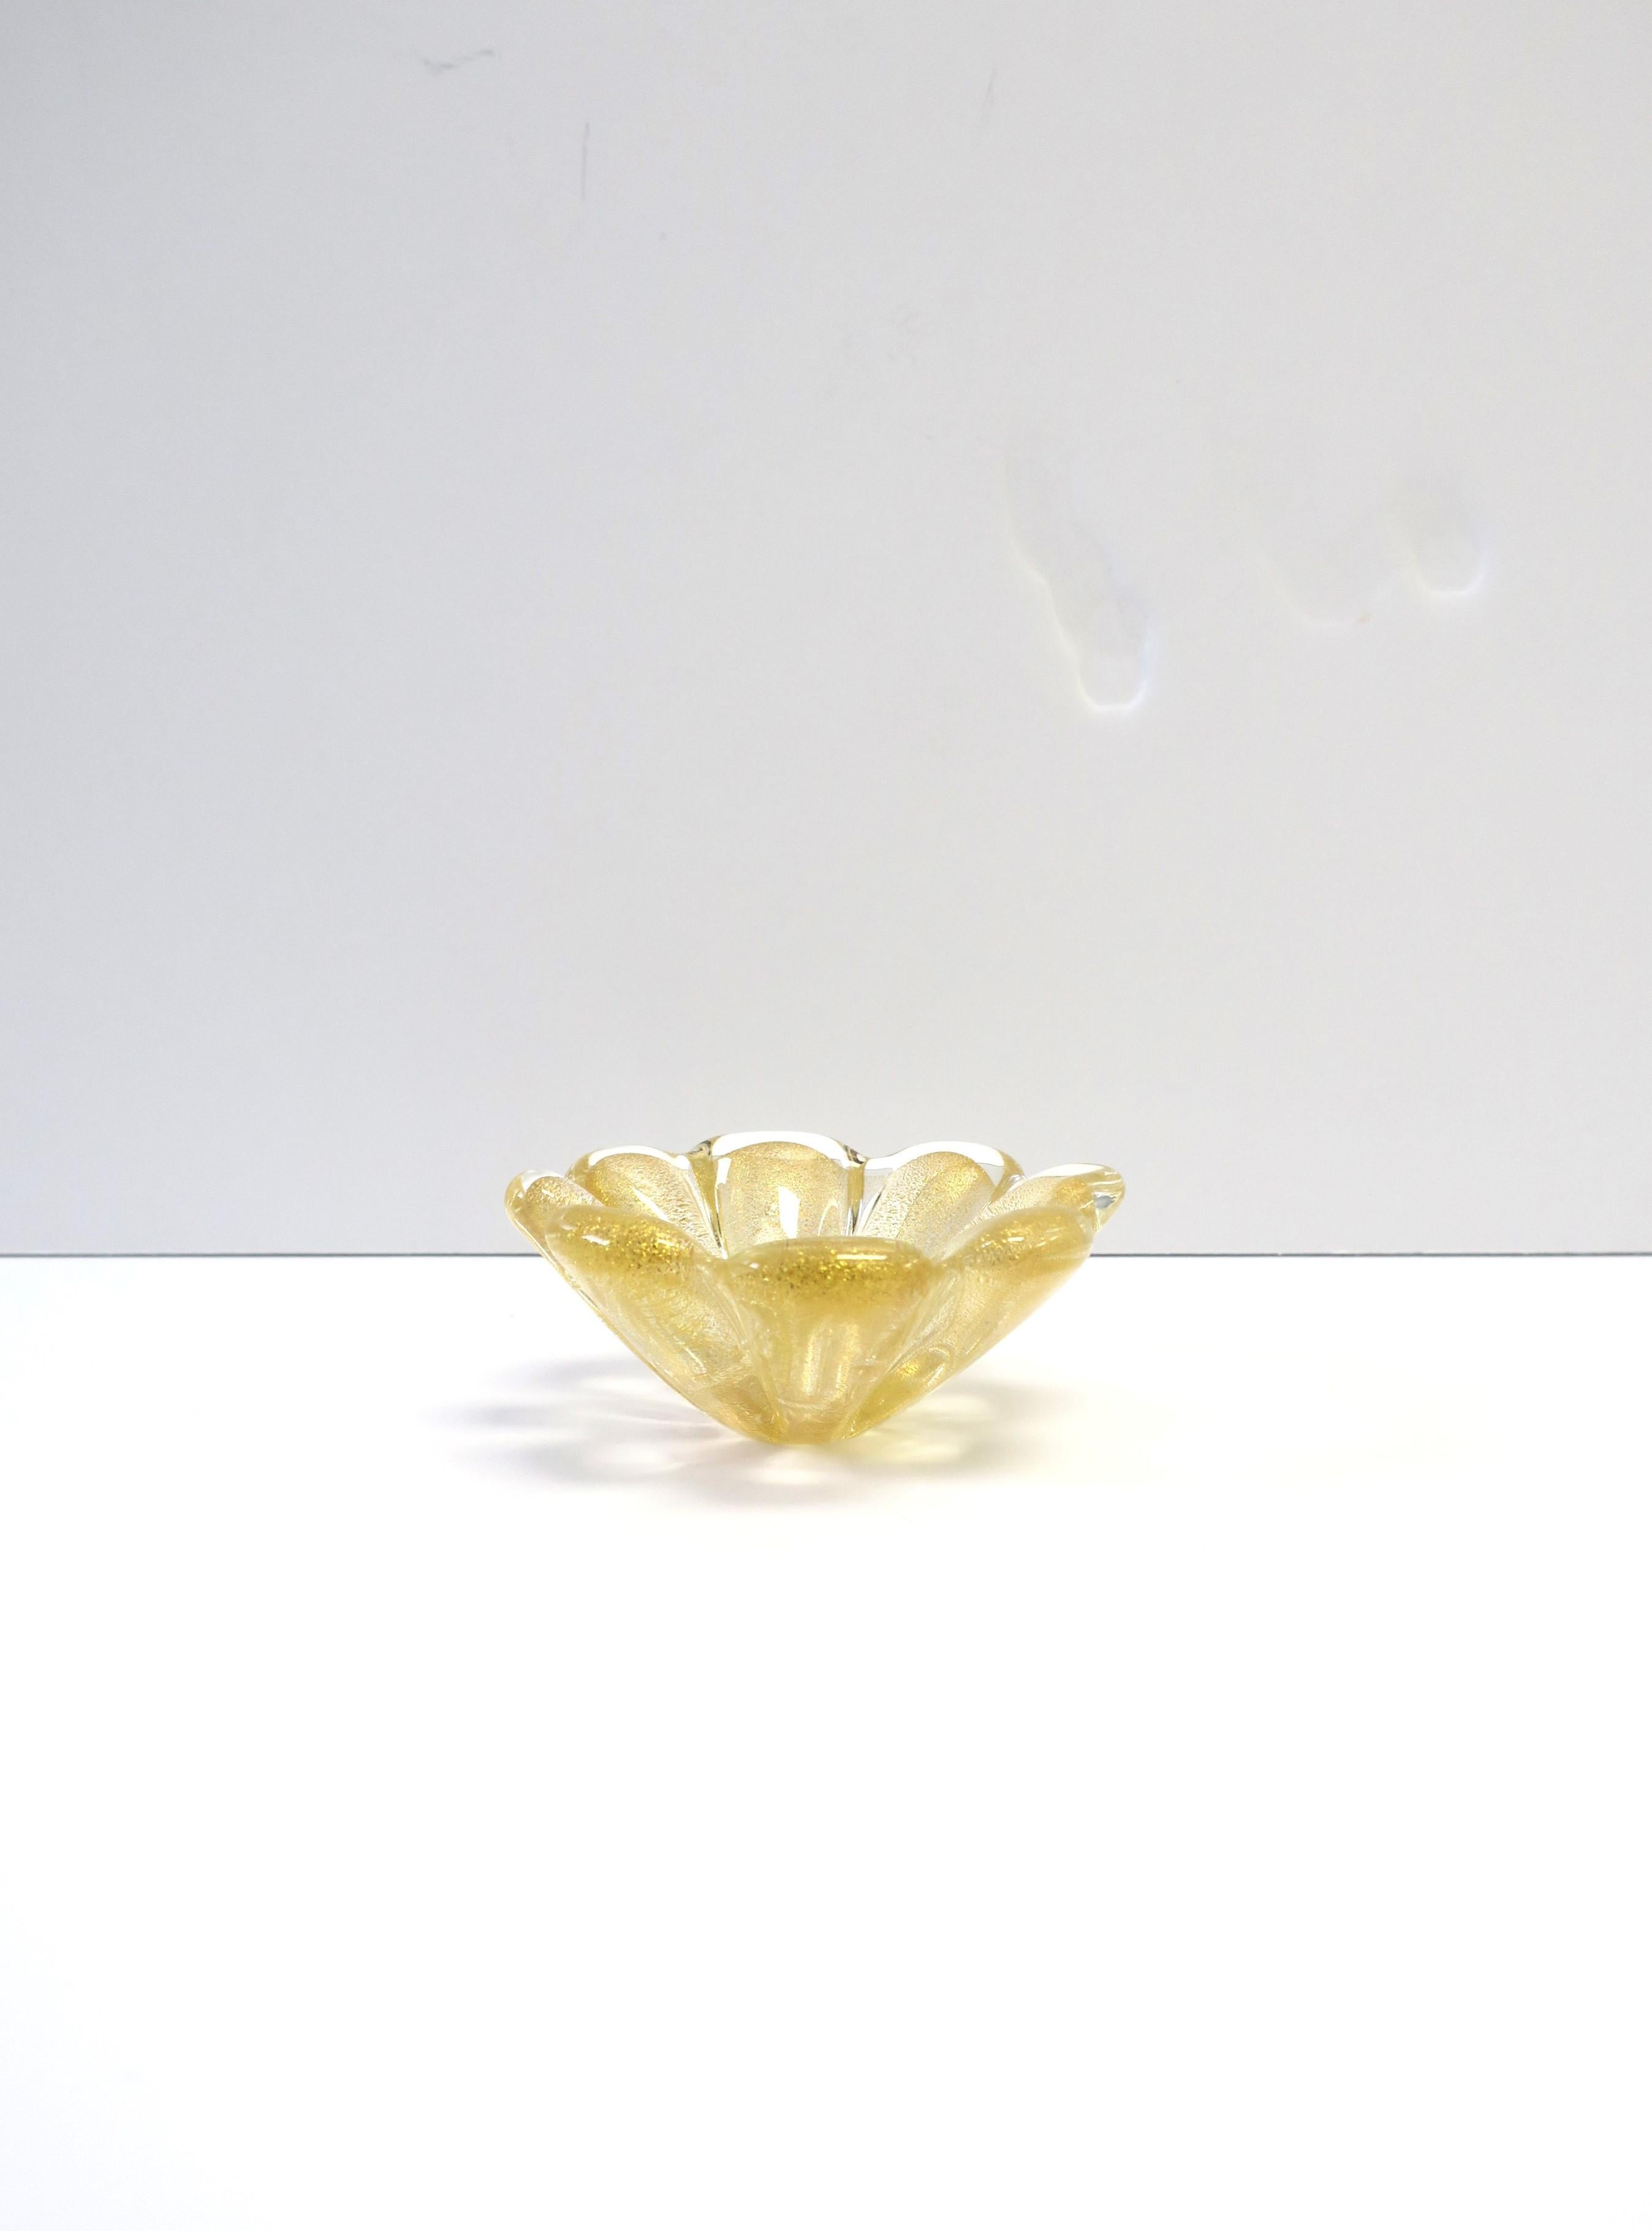 Organic Modern Italian Murano Gold Art Glass Jewelry Dish For Sale